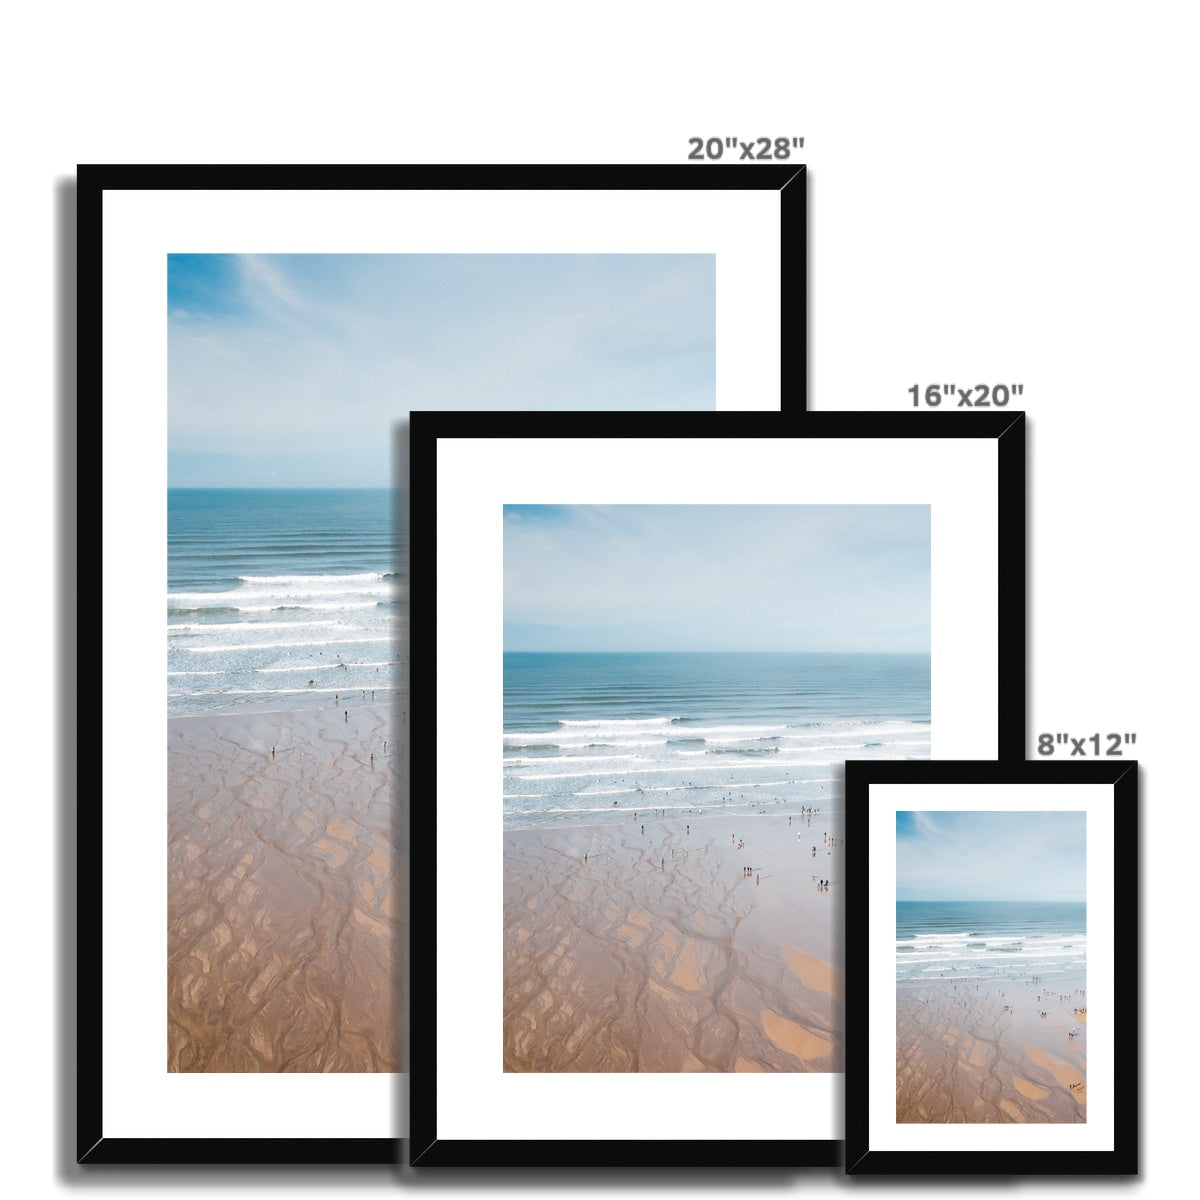 polzeath beach frame sizes